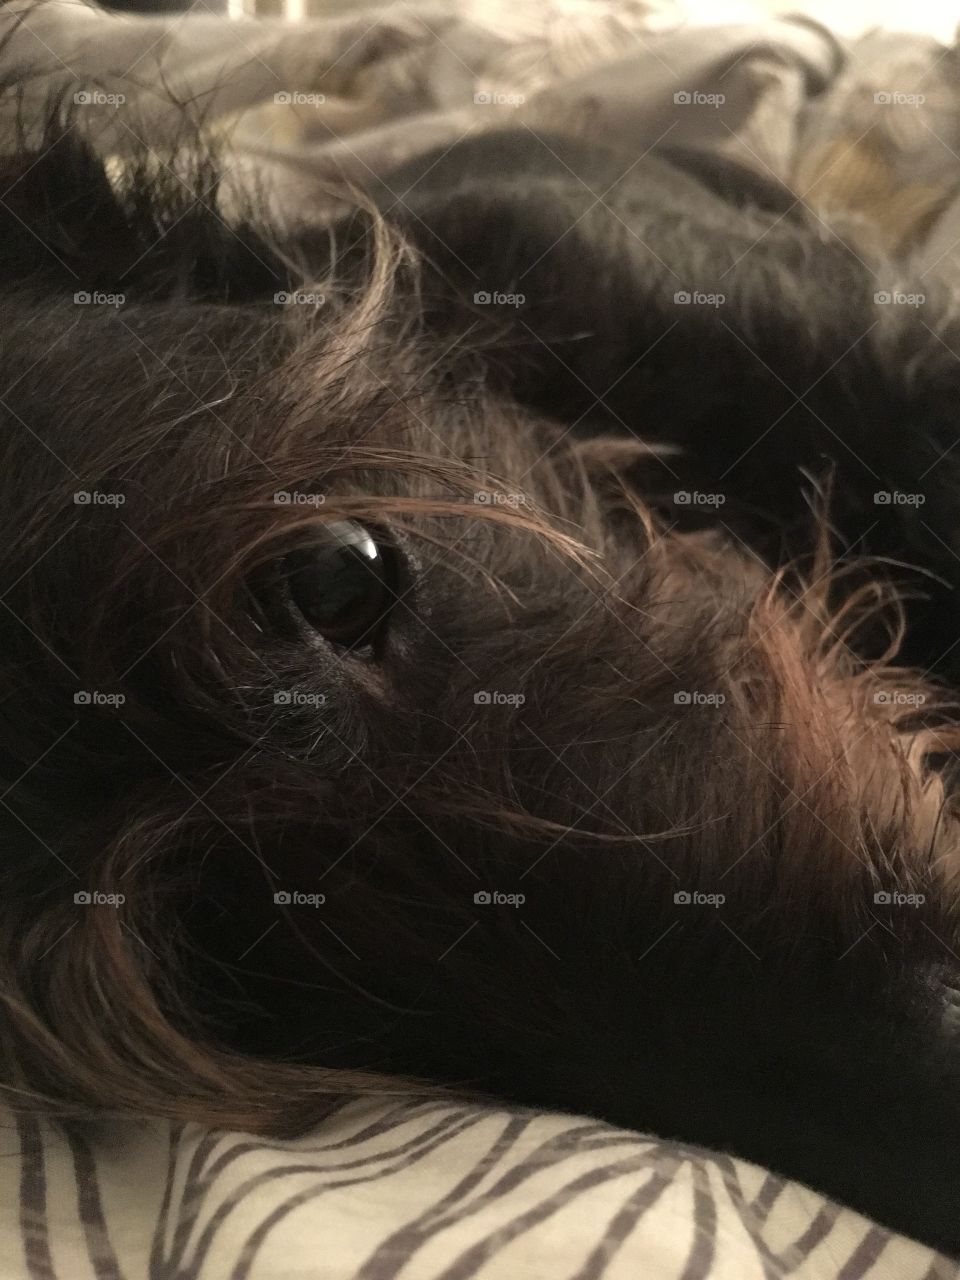 Dog close up